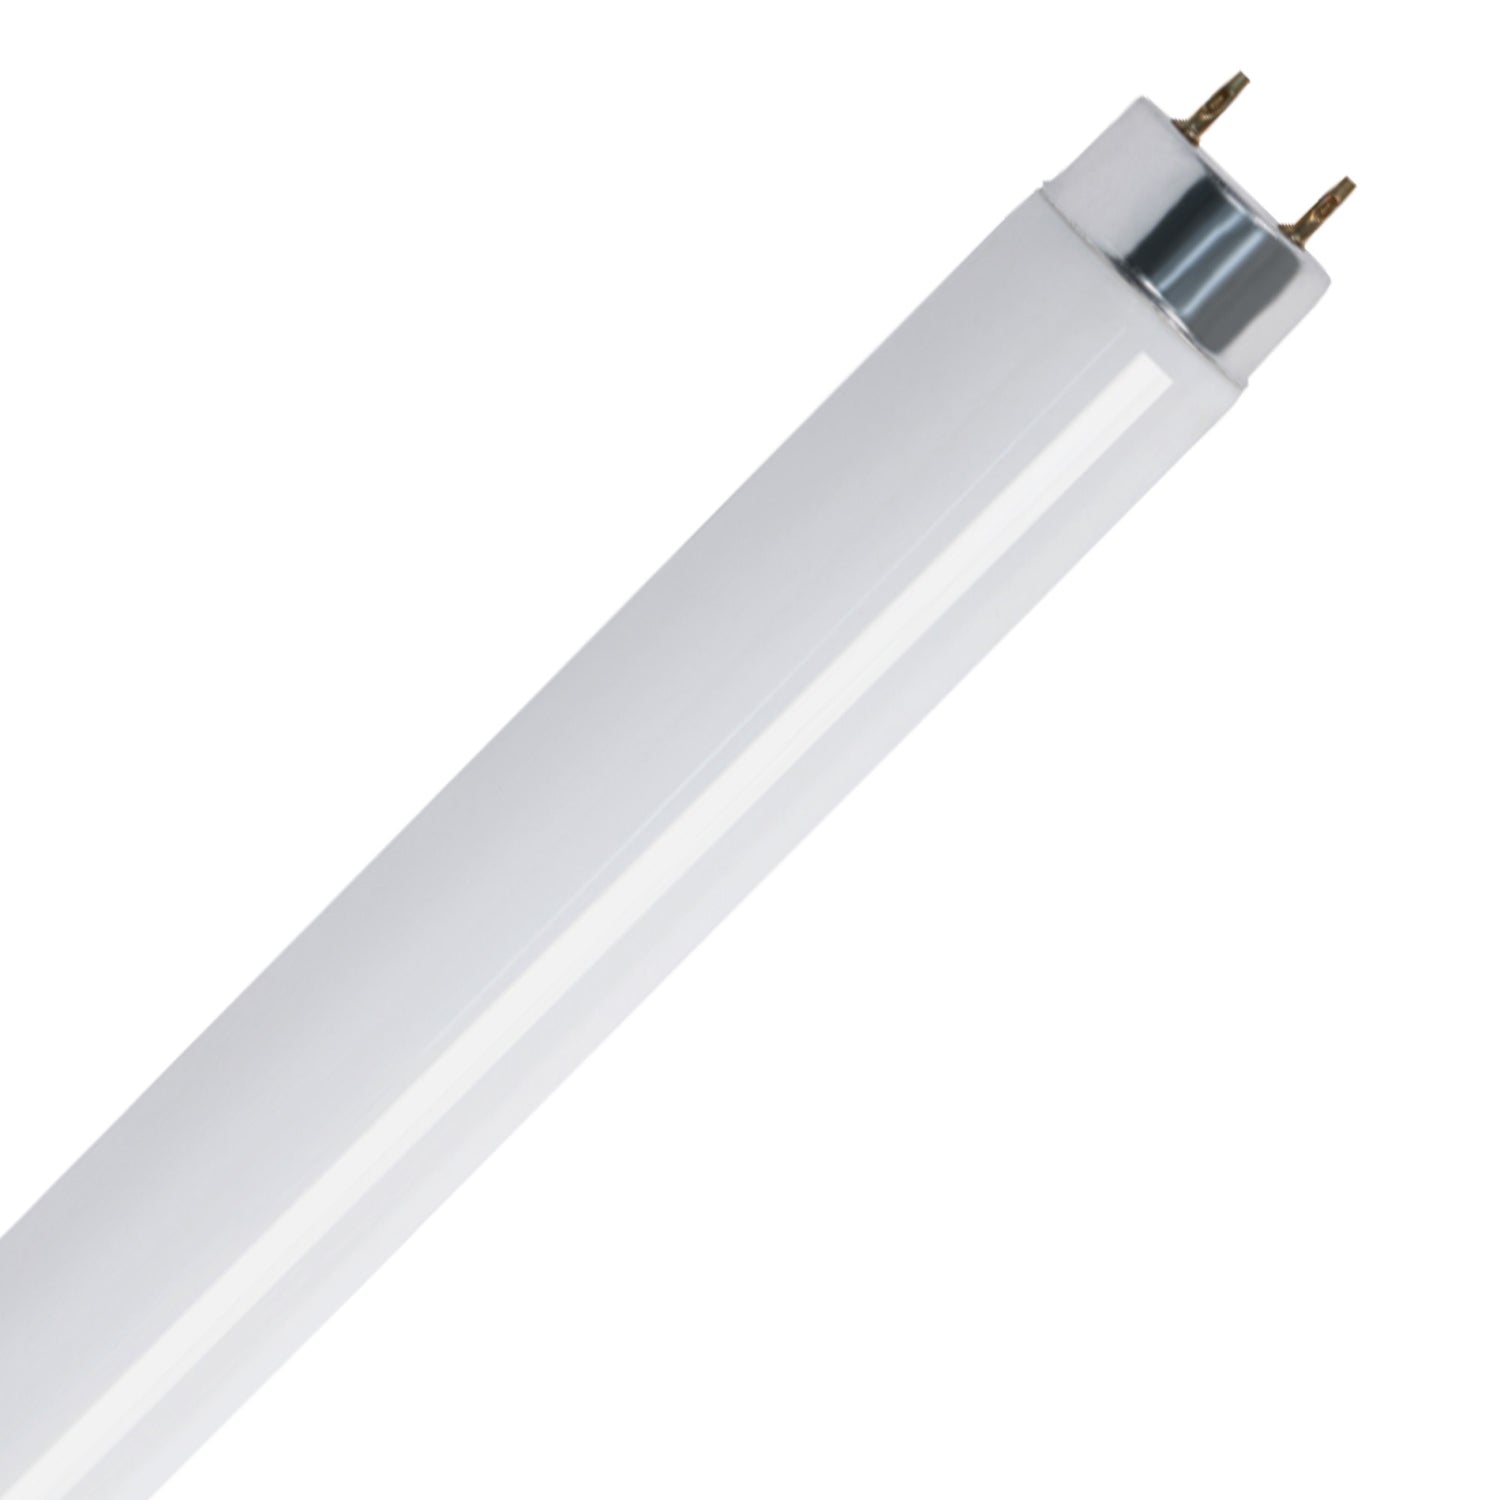 4 ft. 32W Daylight White (5000K) G13 Base (T8 Replacement) Fluorescent Linear Light Tube (10-Pack)